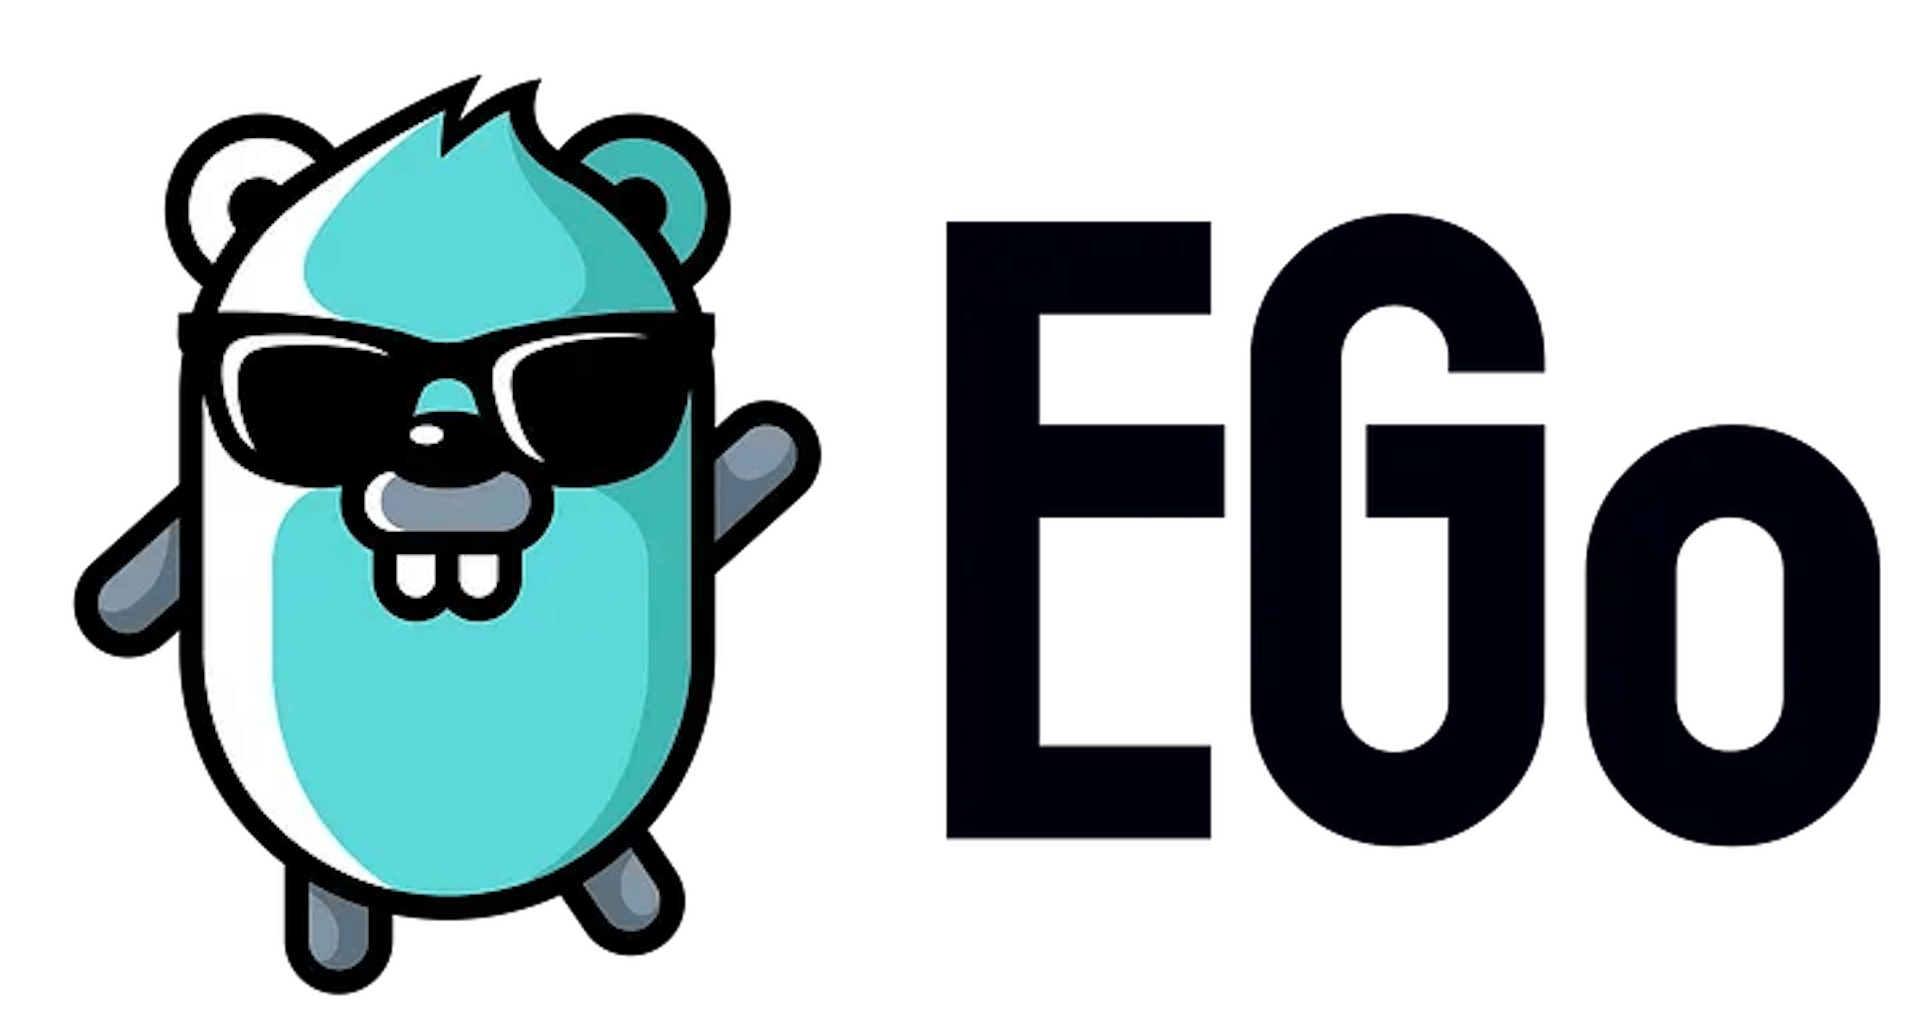 How we built EGo